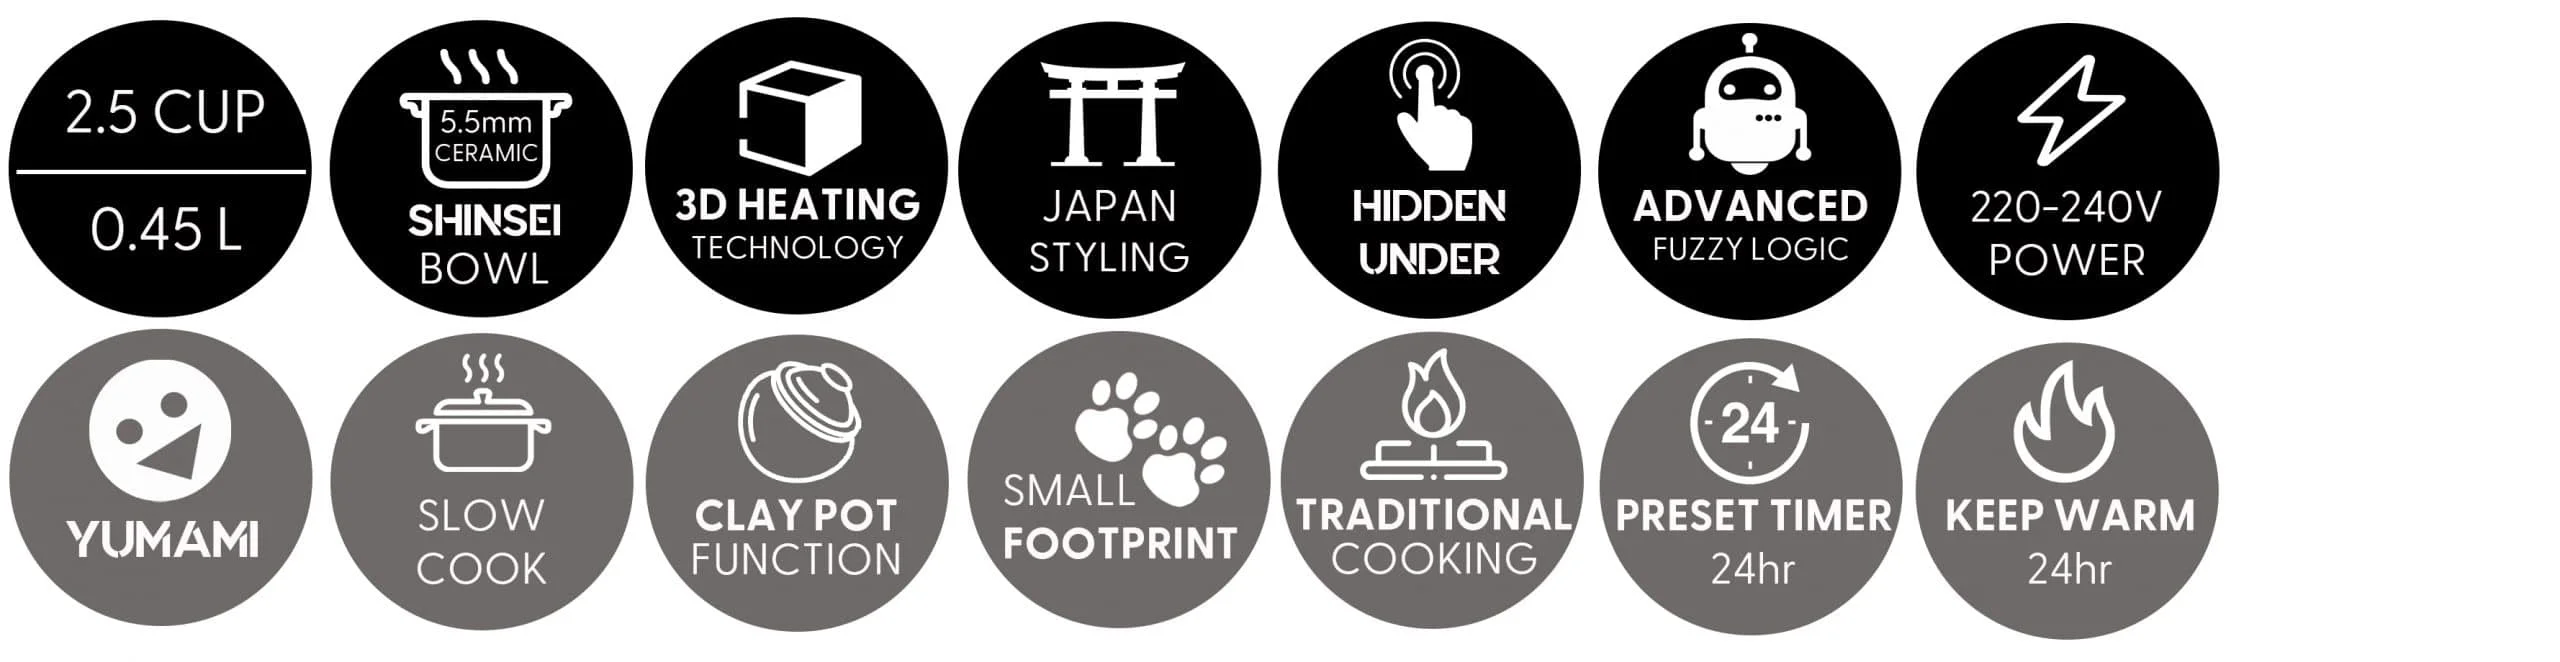 Cuiseur à riz Tsuki Mini Advanced Fuzzy Logic Ceramic - Yum Asia EU - No.1  For Premium Rice Cookers